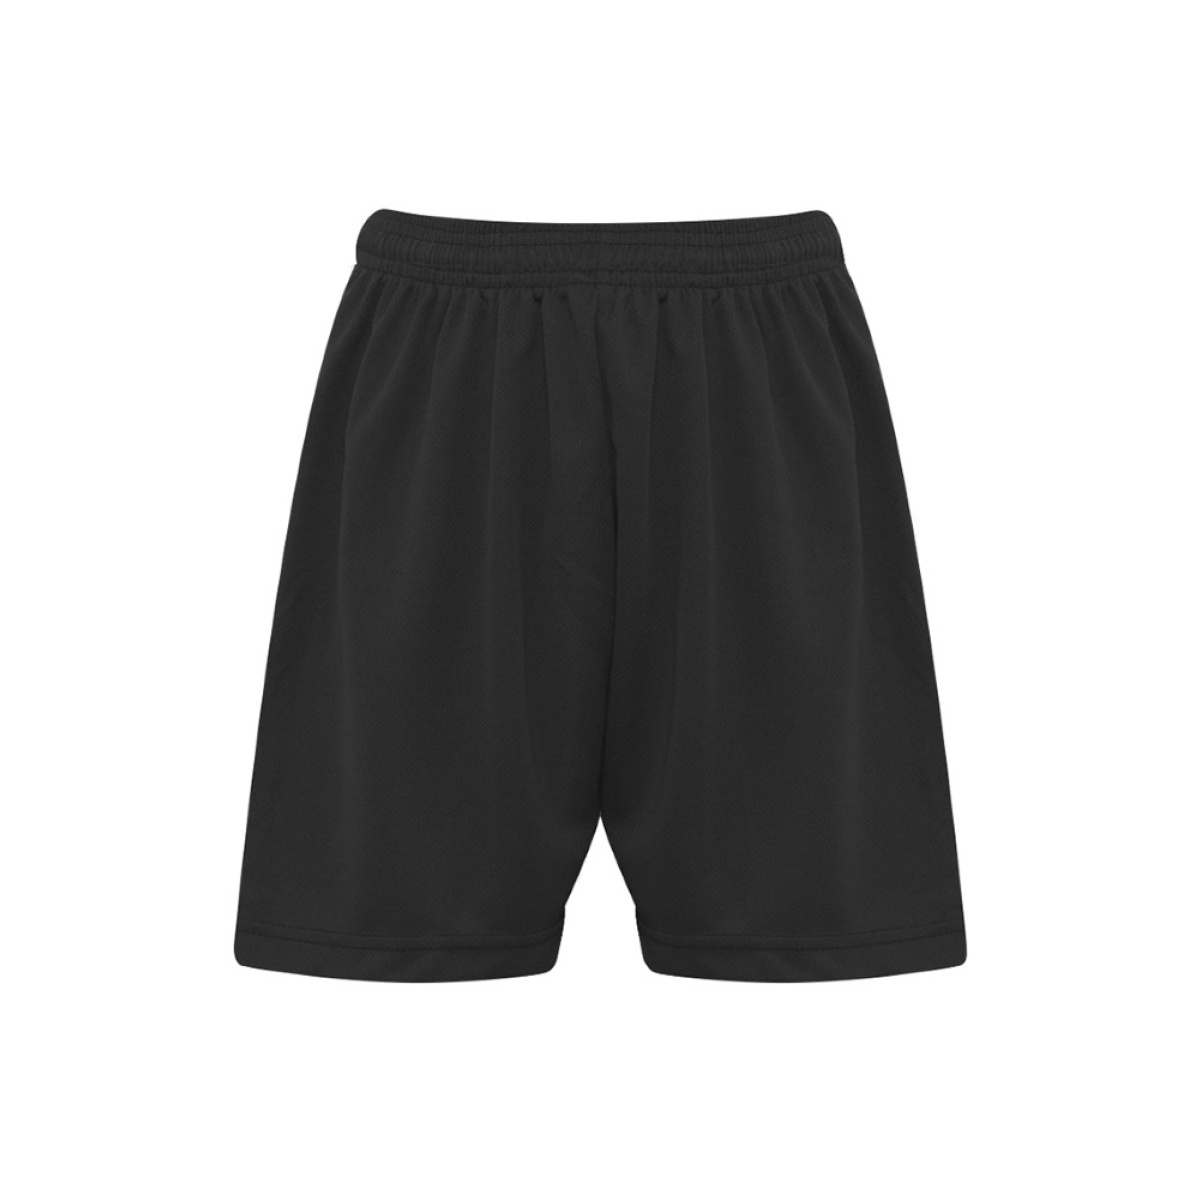 PE Honeycomb Shorts - Black, Kents Hill Junior Academy, PE Wear